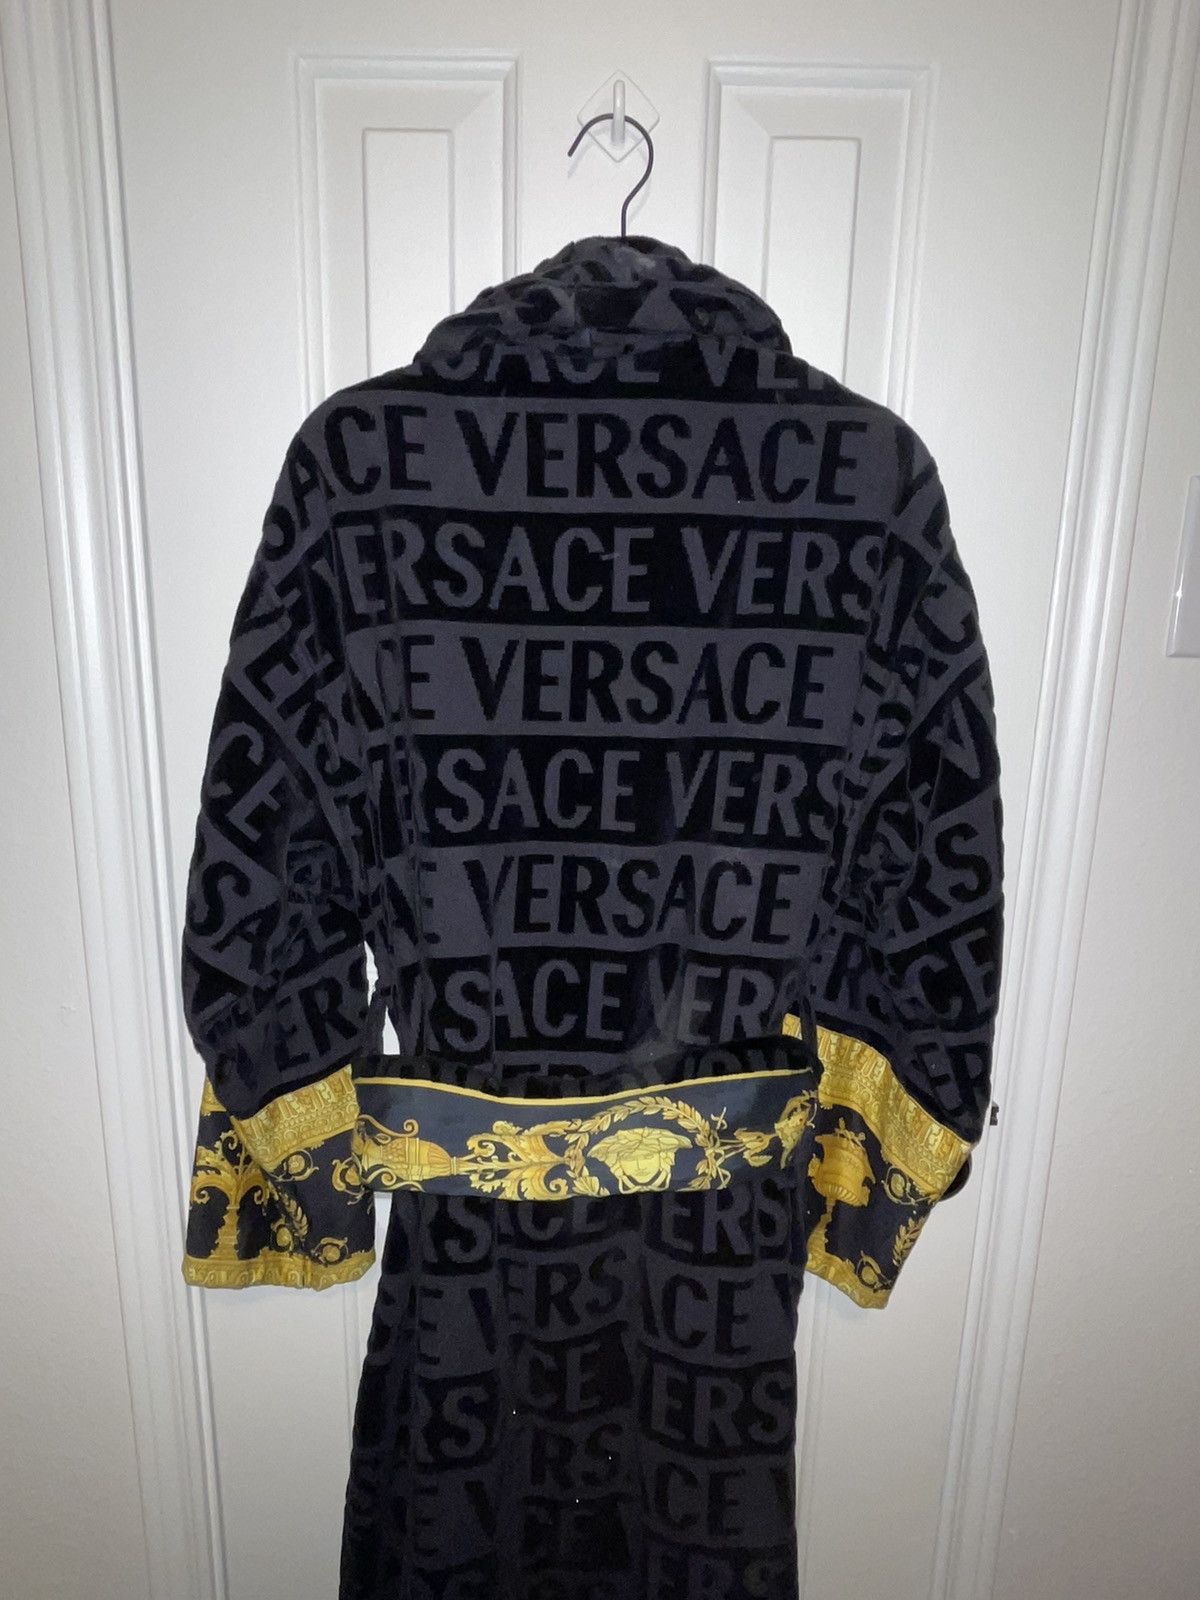 Versace Versace robe men’s Mendium black | Grailed